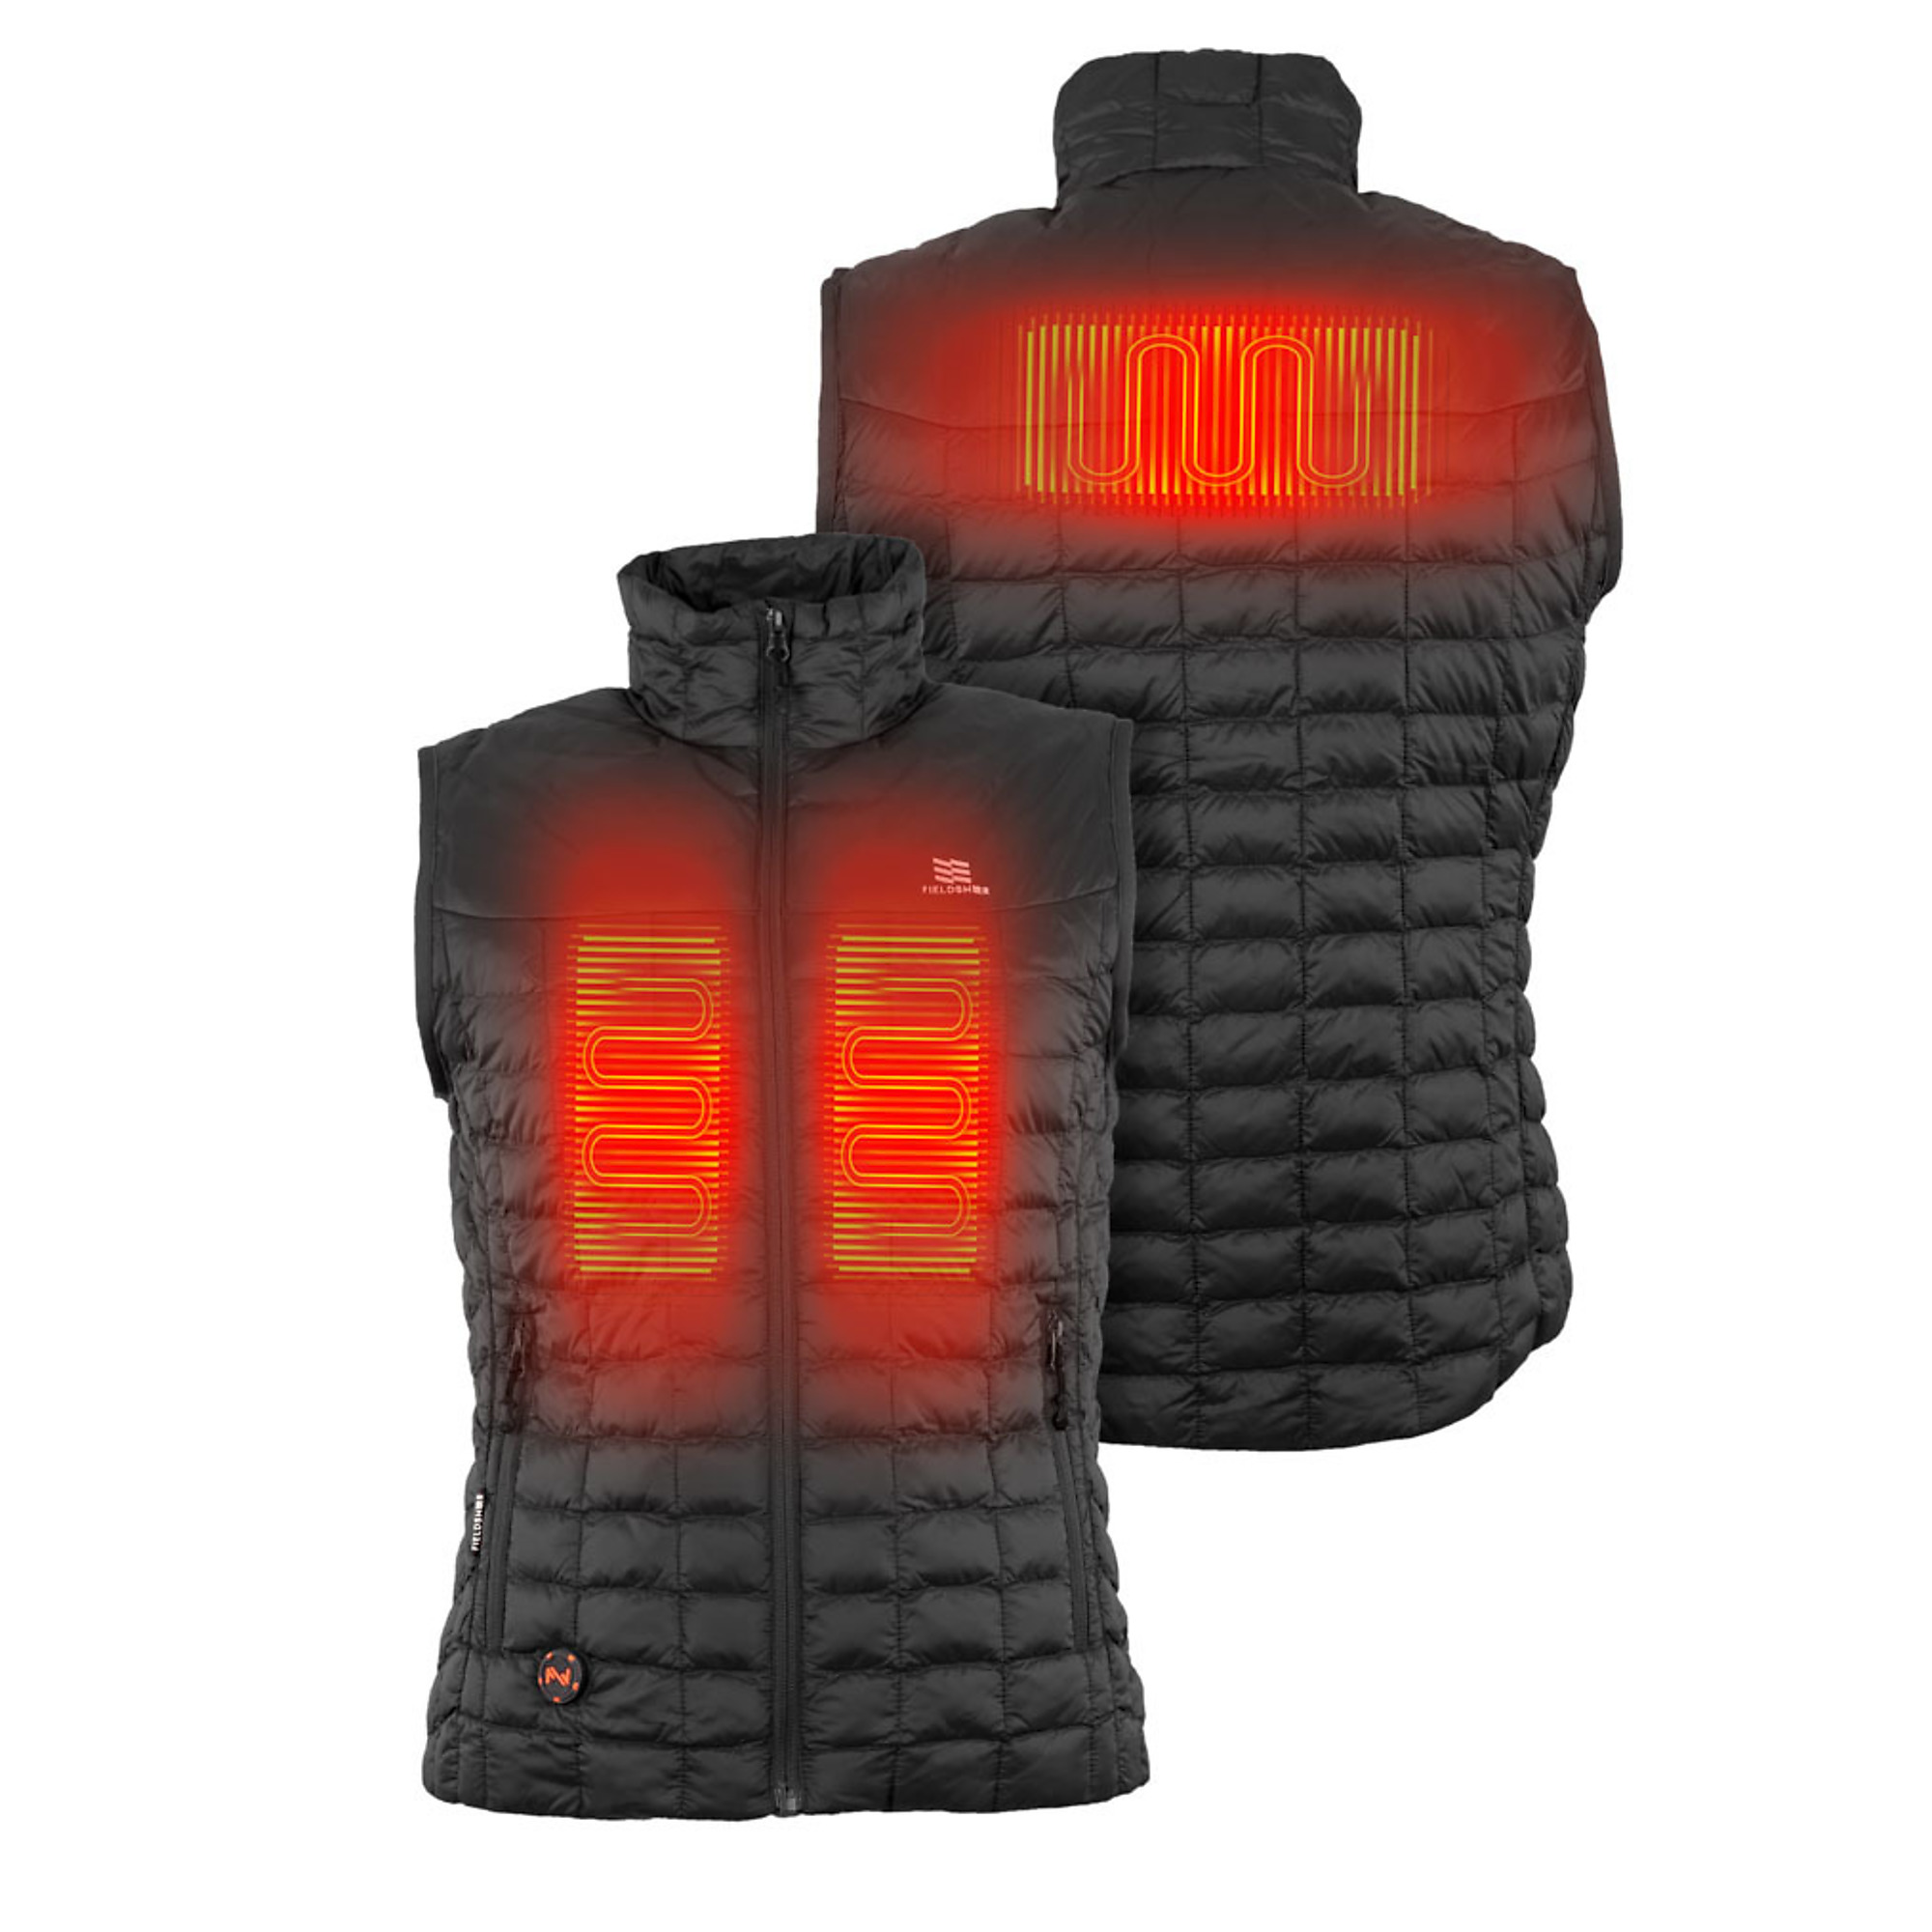 Fieldsheer, Women's 7.4v Backcountry Heated Vest, Size XL, Color Black, Model MWWV04010520